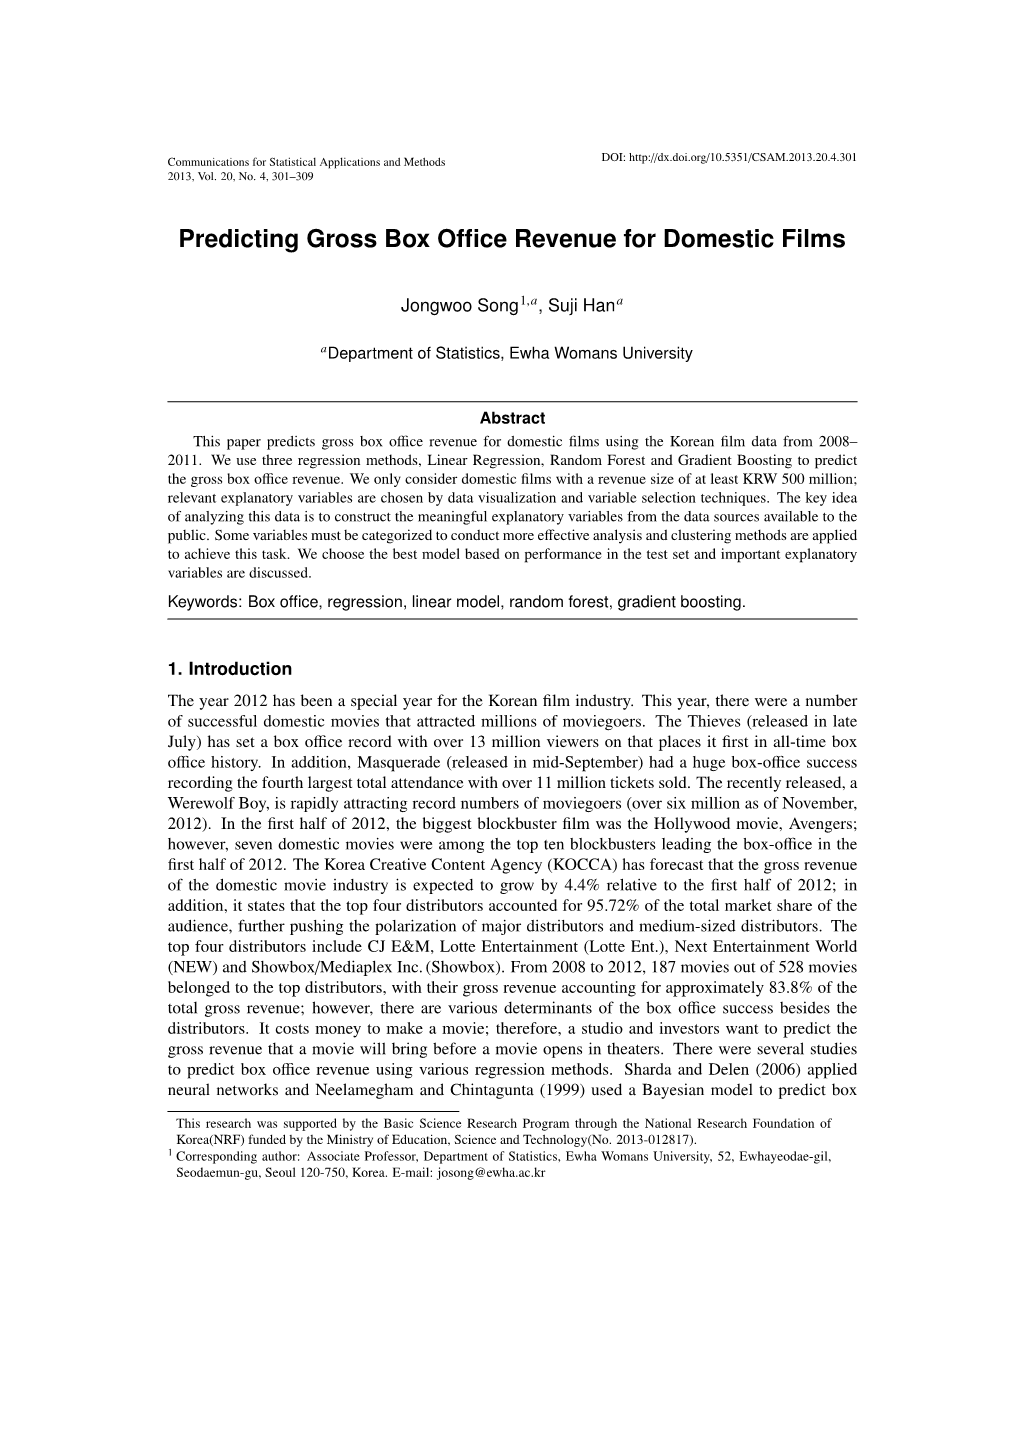 Predicting Gross Box Office Revenue for Domestic Films